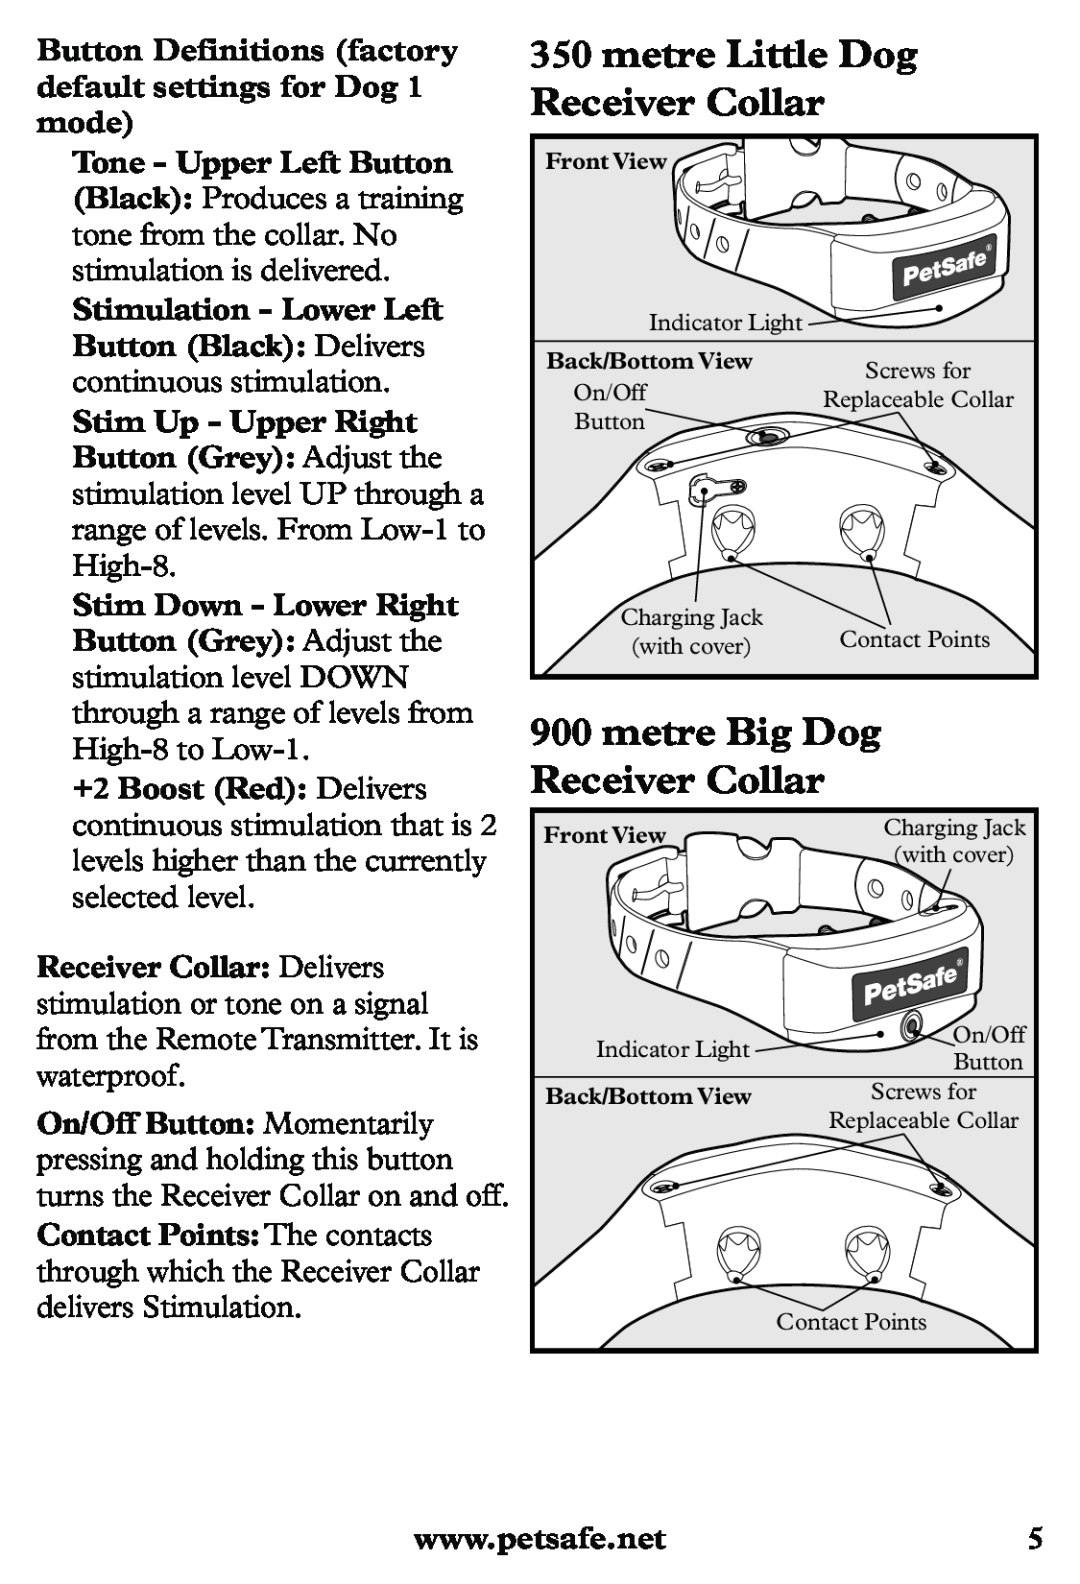 Petsafe PDT20-11939 manuel dutilisation metre Little Dog Receiver Collar, metre Big Dog Receiver Collar 